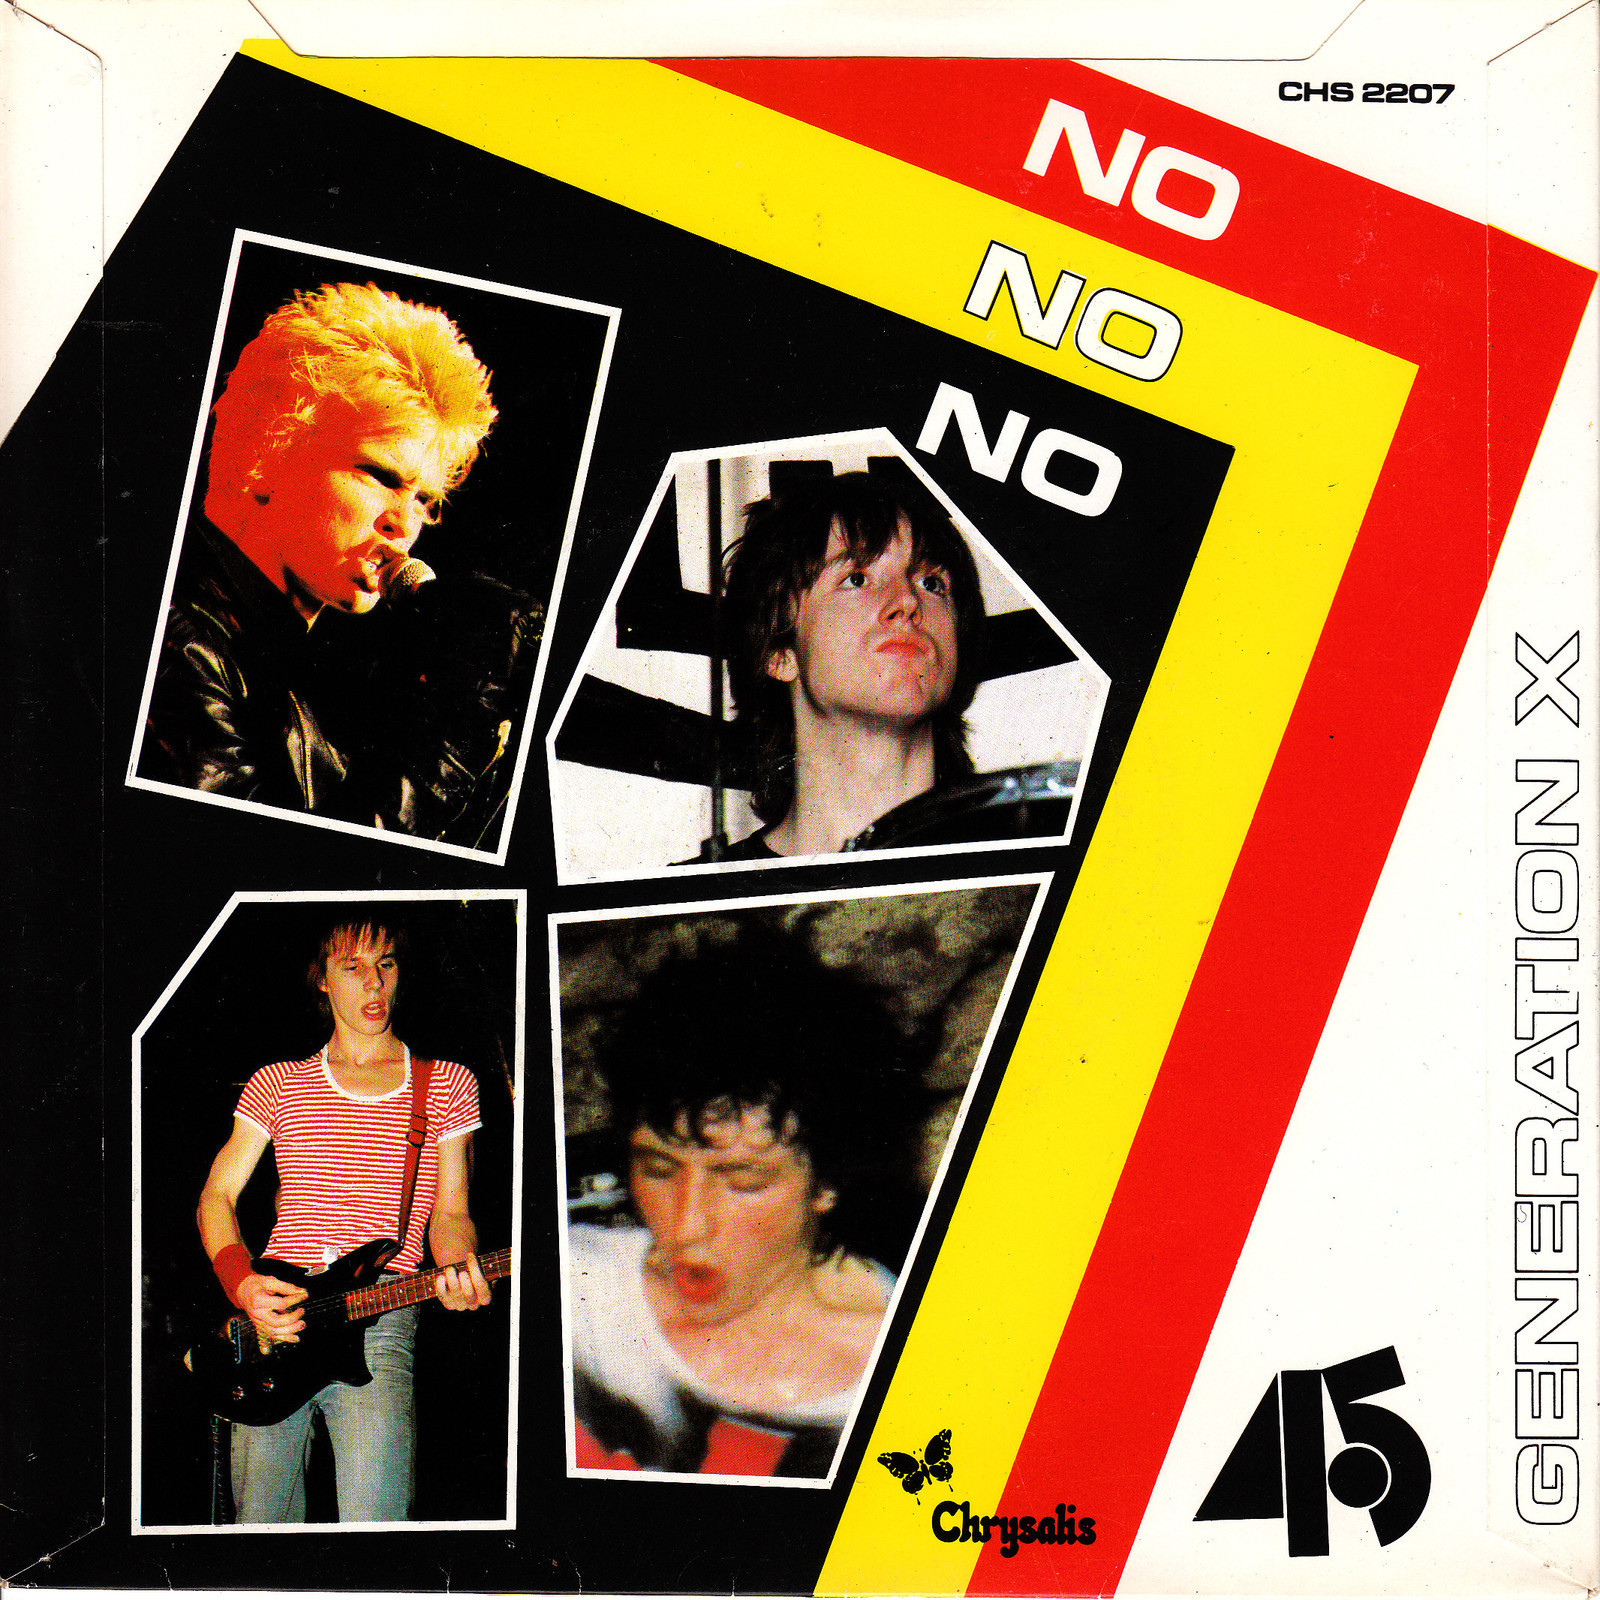 Generation X - Ready Steady Go - UK 7" 1978 (Chrysalis - CHS 2207) Back Cover